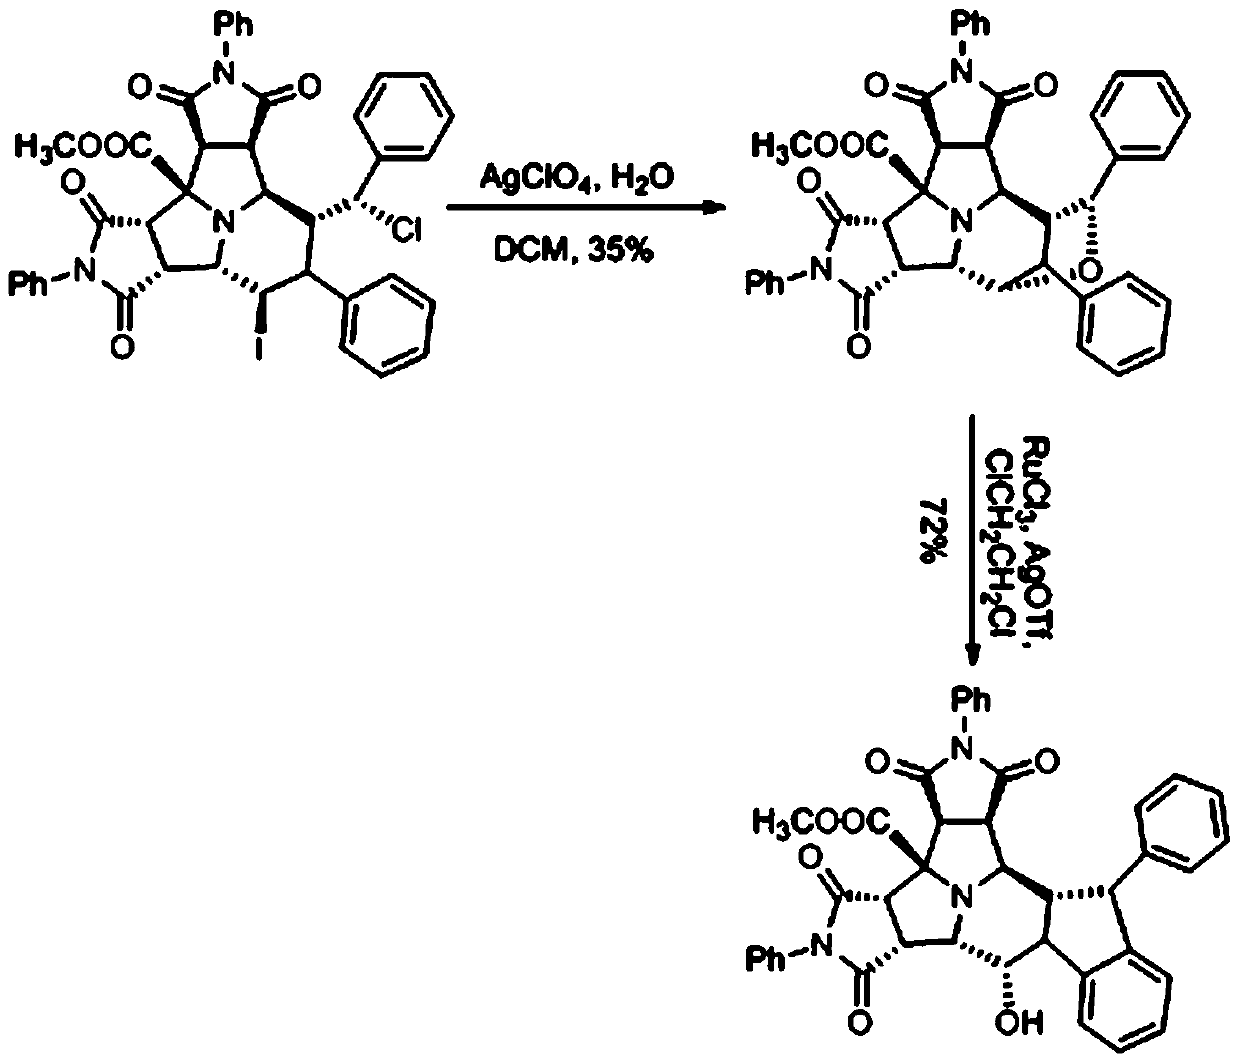 A preparation method of cyclopentyl[f]pyrrolo[2,1,5-cd]indazine derivatives